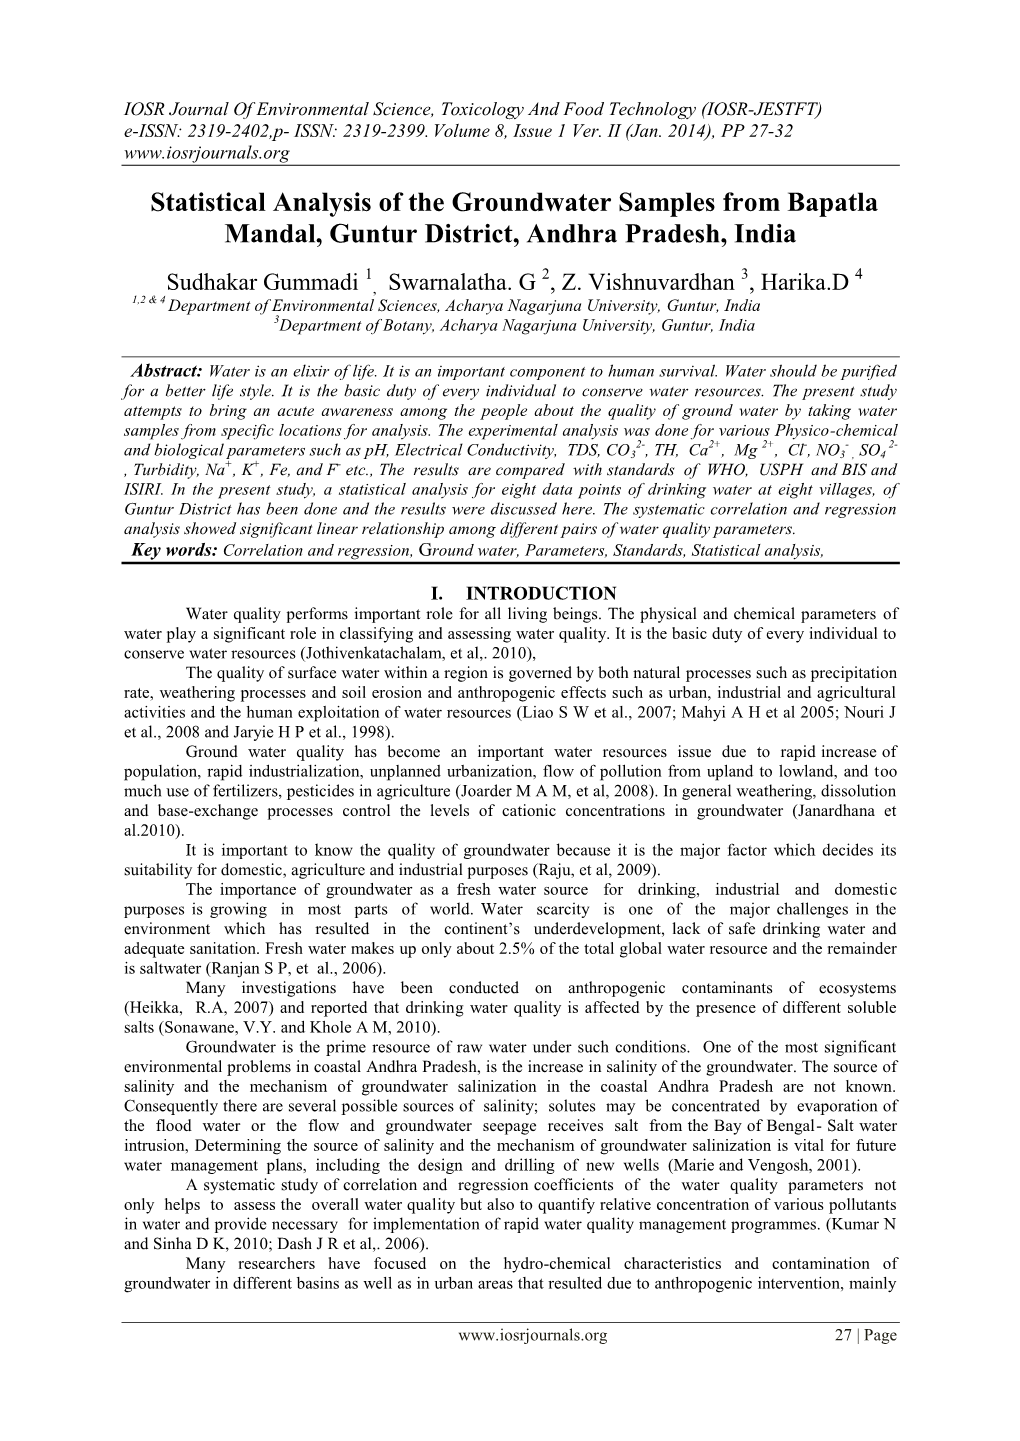 Statistical Analysis of the Groundwater Samples from Bapatla Mandal, Guntur District, Andhra Pradesh, India